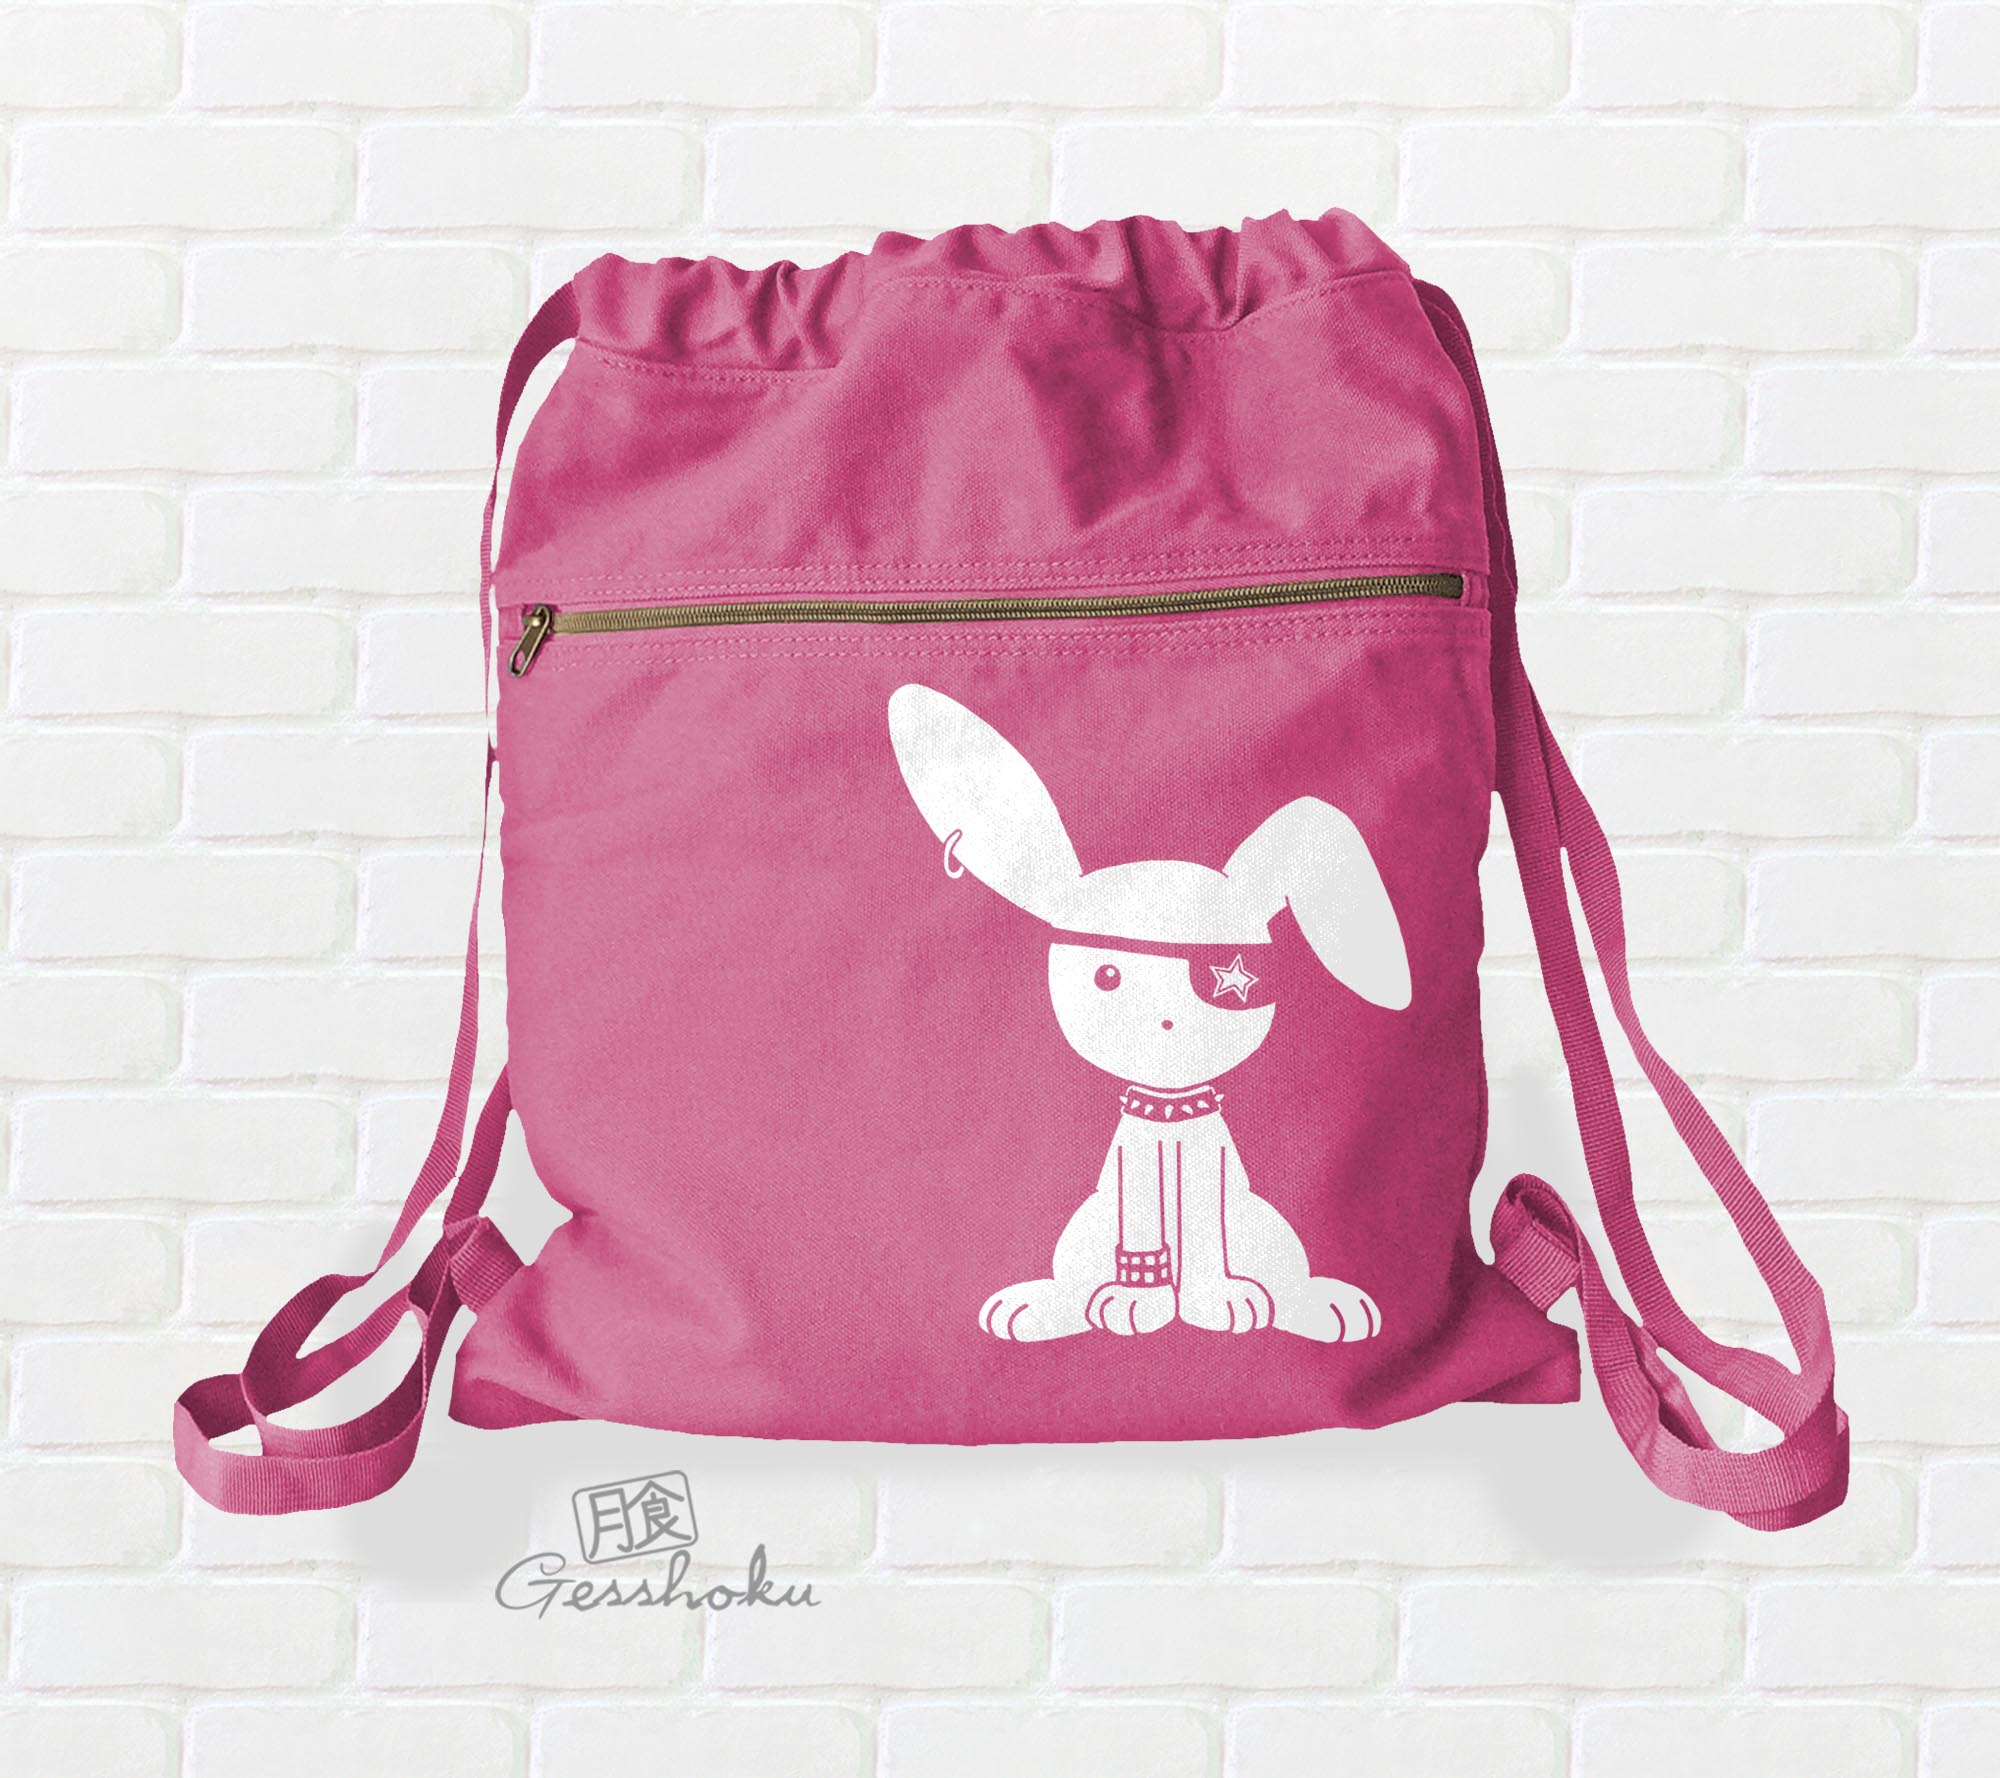 Jrock Bunny Cinch Backpack - Raspberry